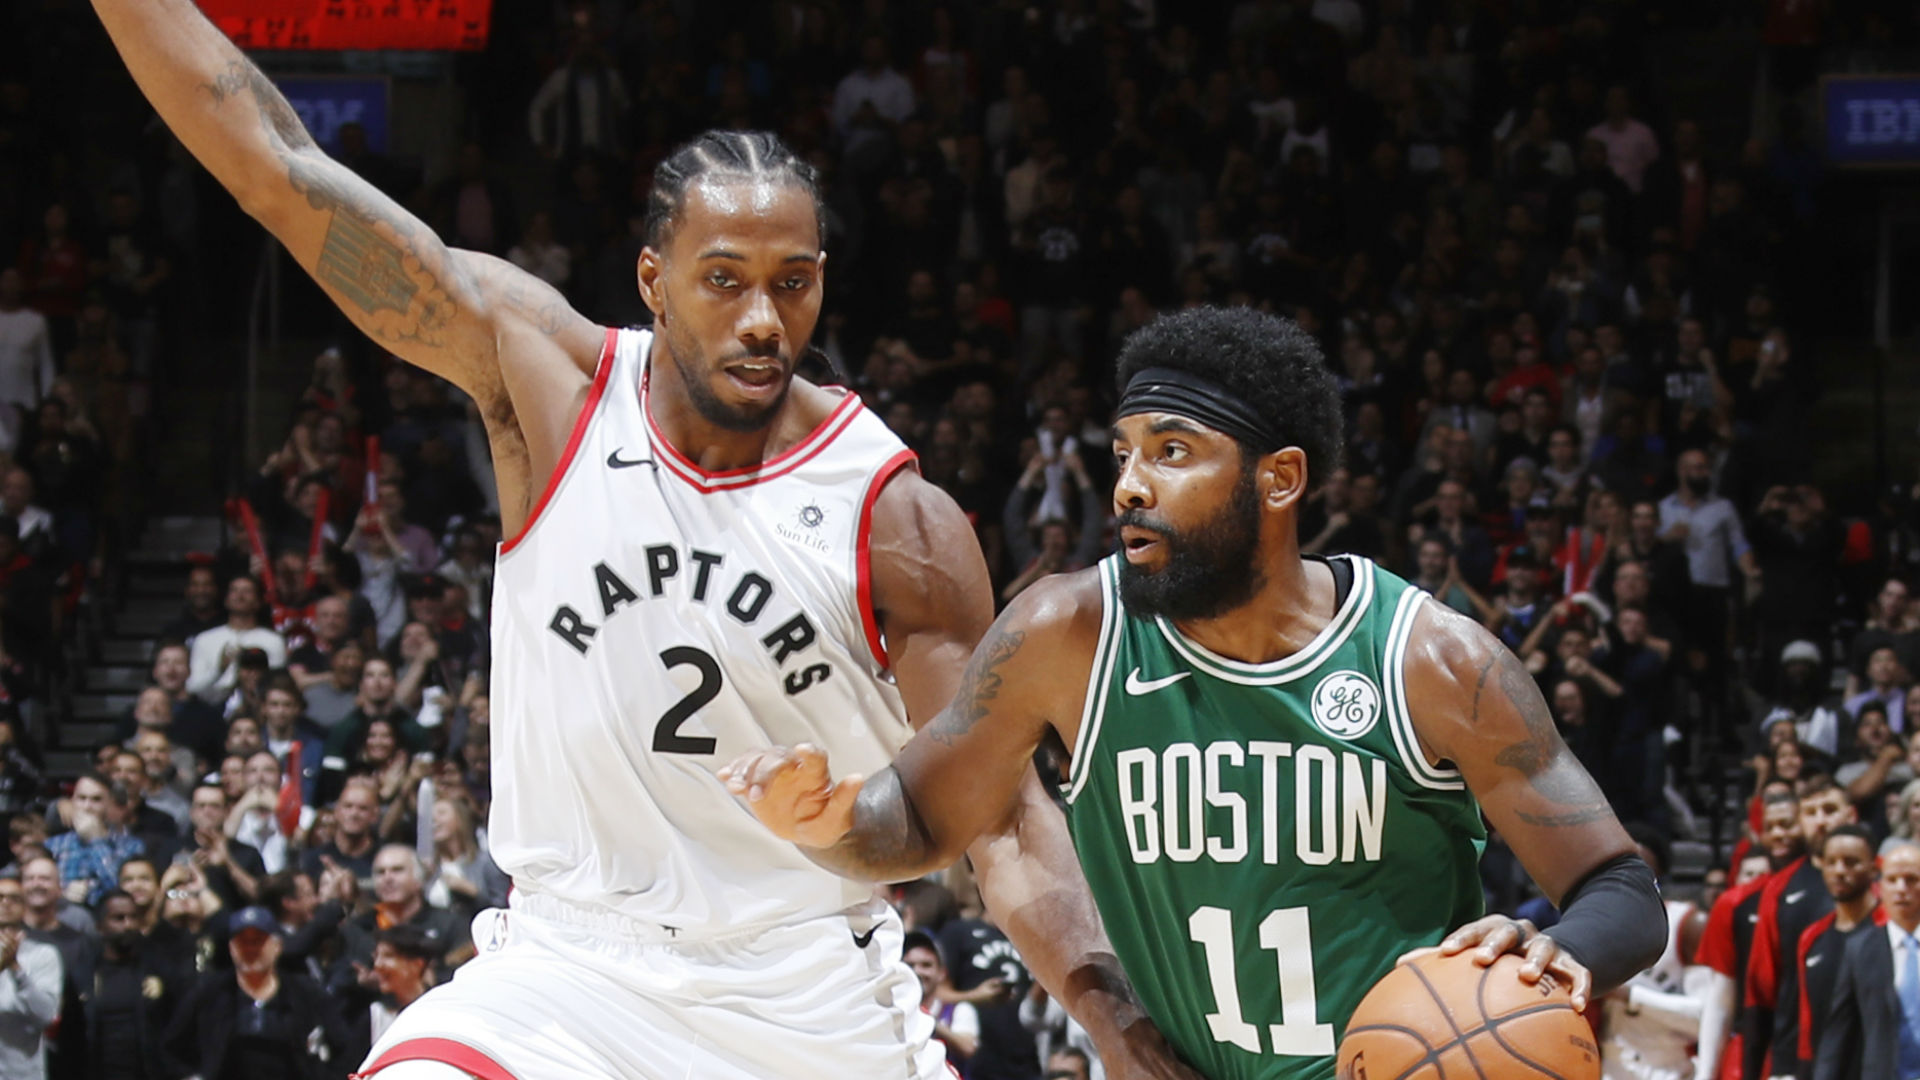 Toronto Raptors vs. Boston Celtics: Live highlights, updates, box score and more | NBA.com1920 x 1080